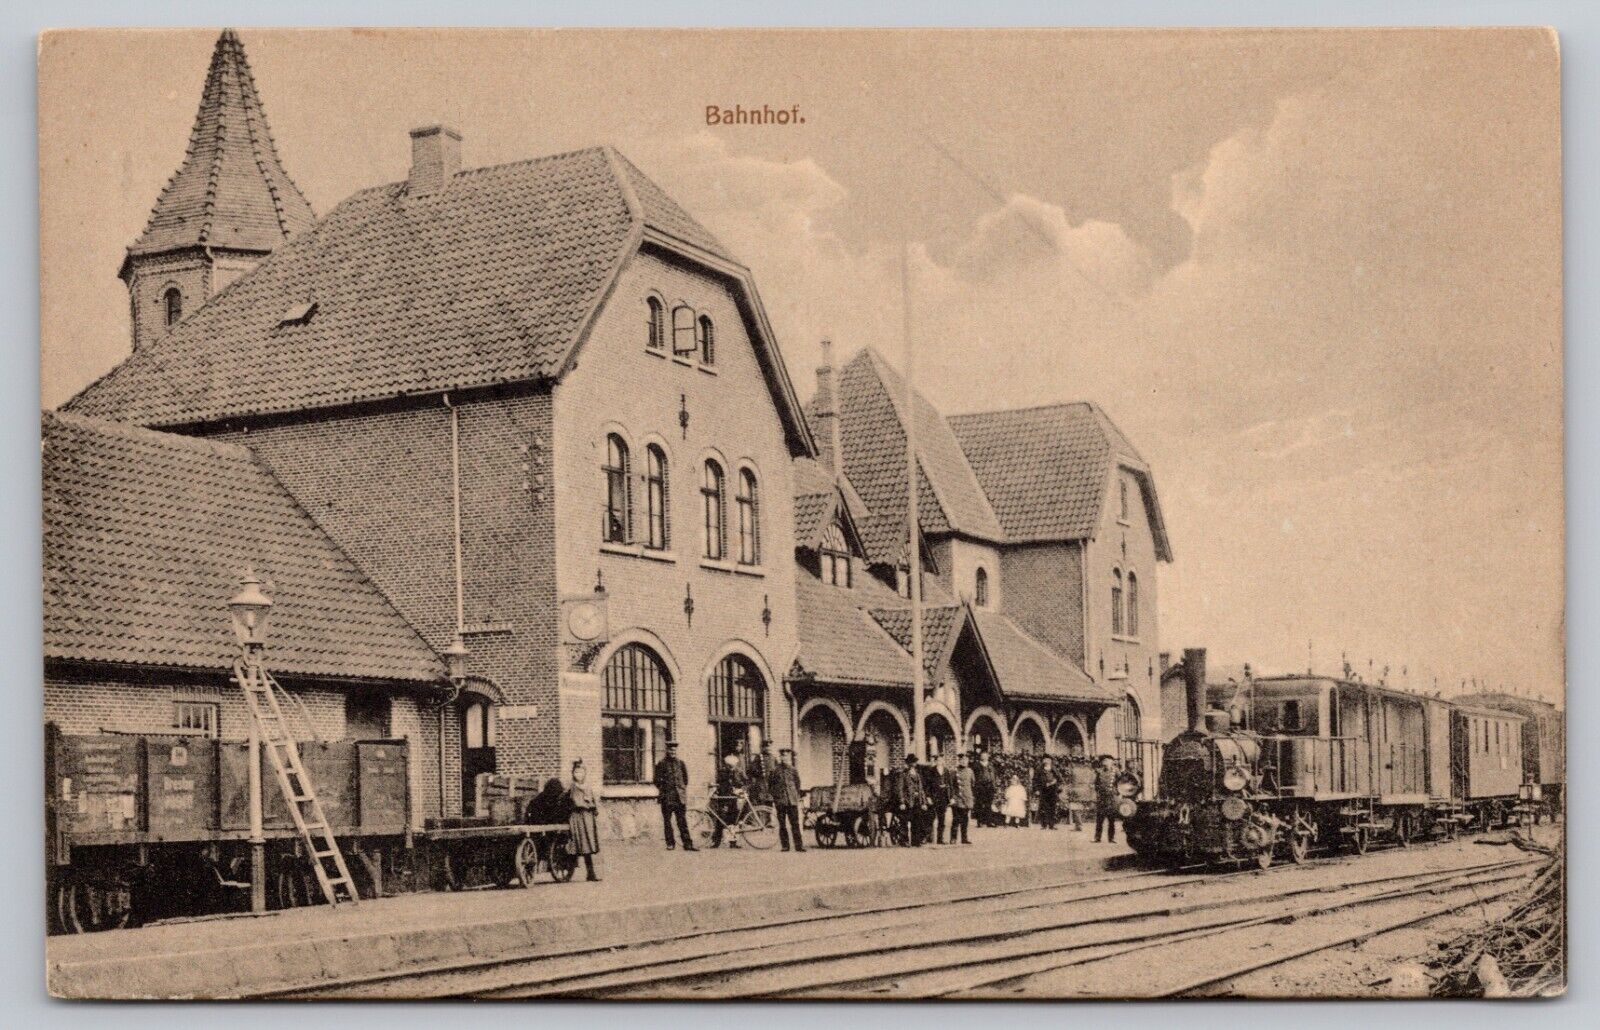 Postcard - Bahnhof, Westerstede, Germany - Train Station - Early 1900s (E3)